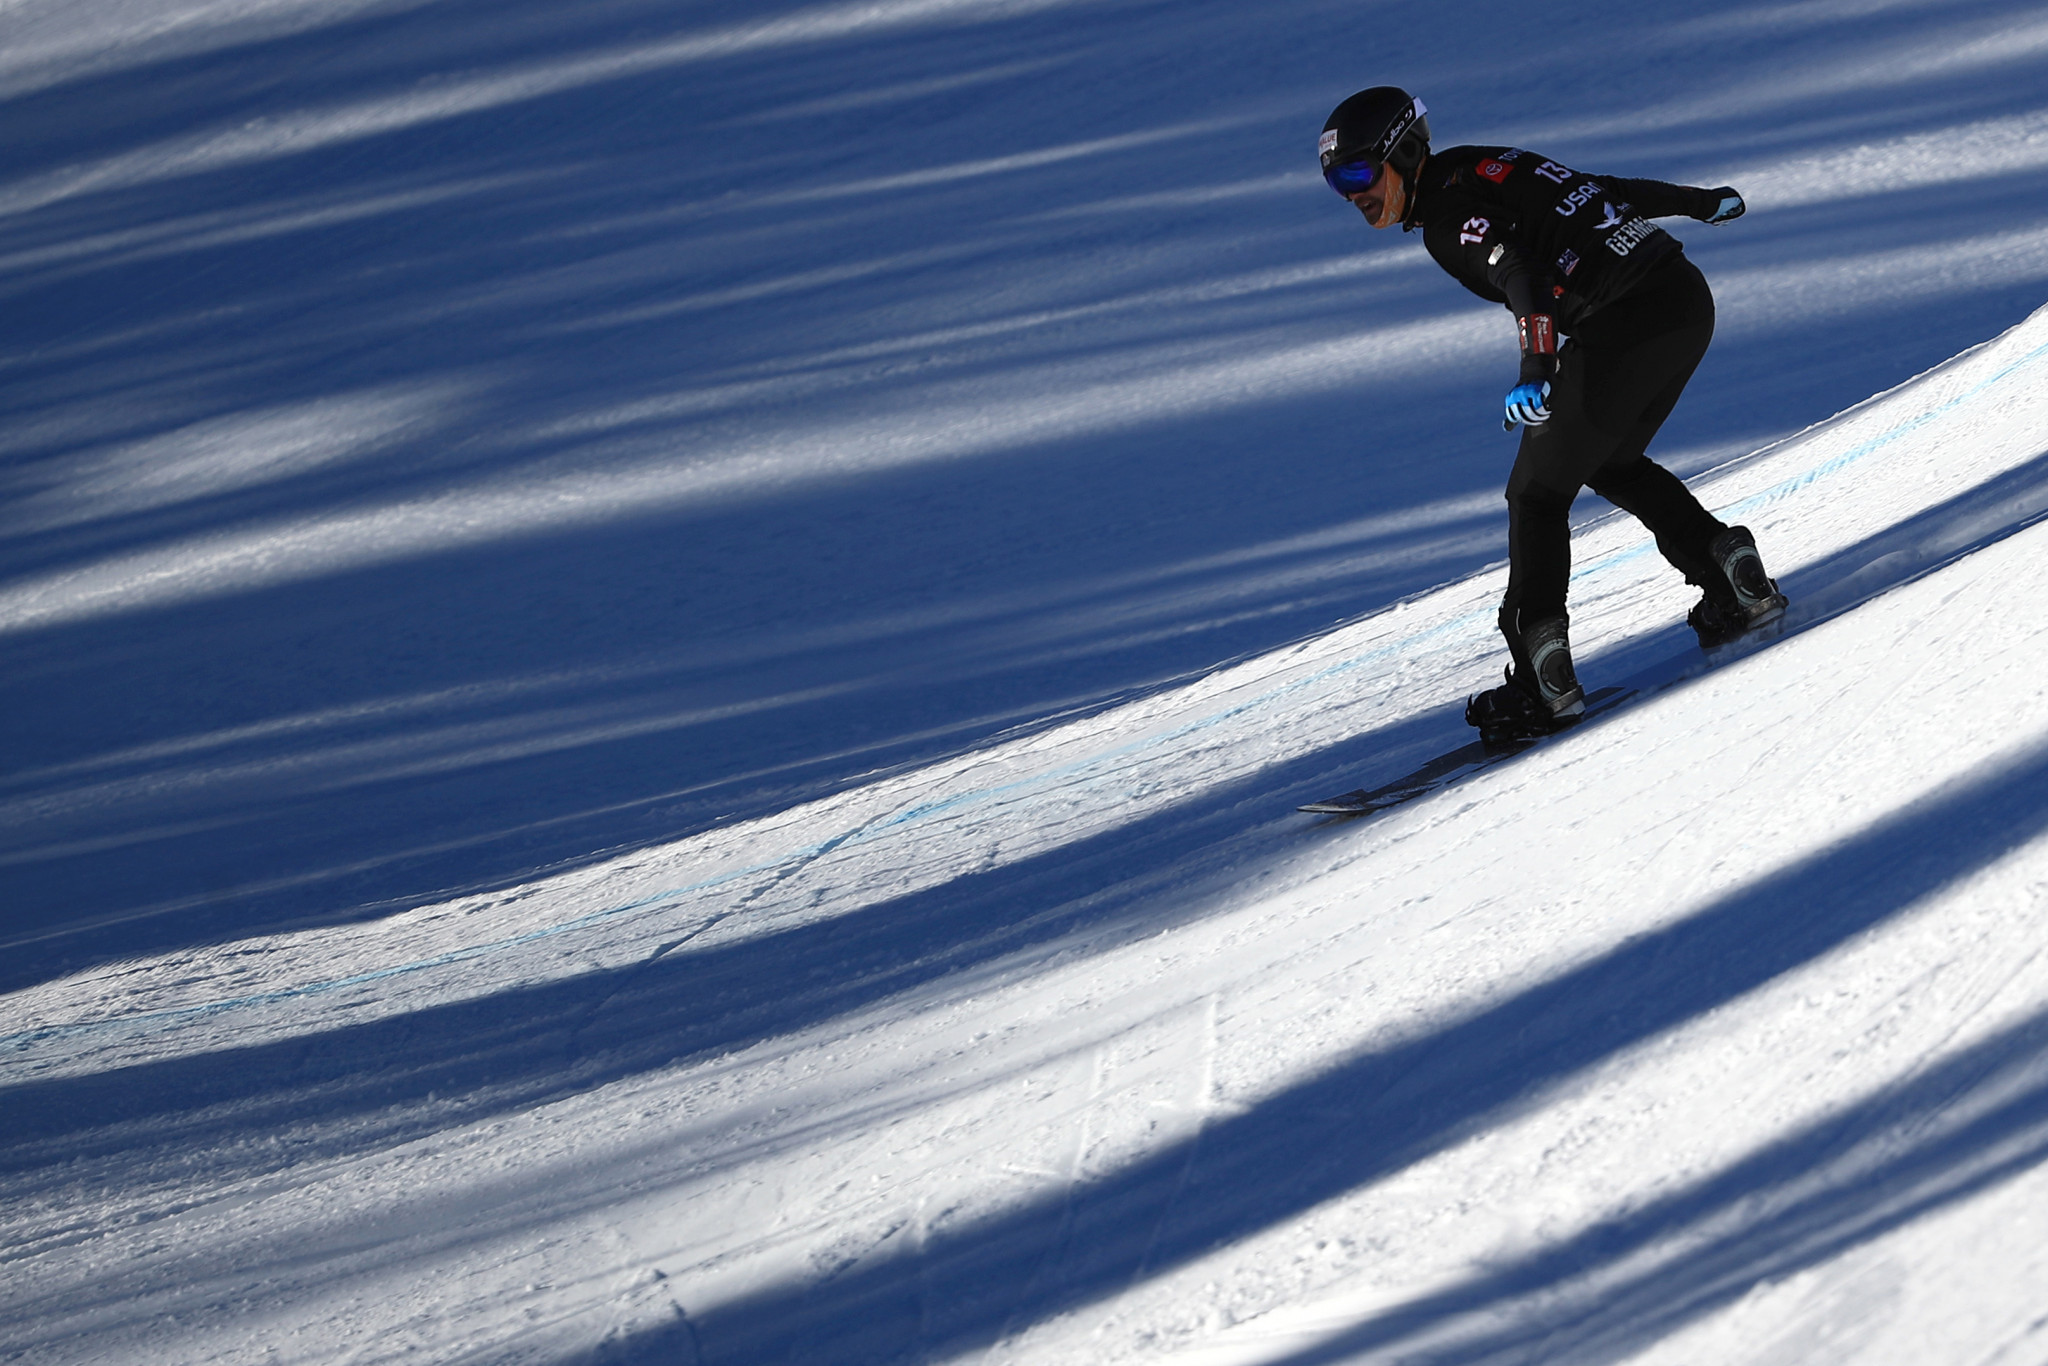 FIS Snowboard Cross World Cup season set to resume in Feldberg following break for World Championships